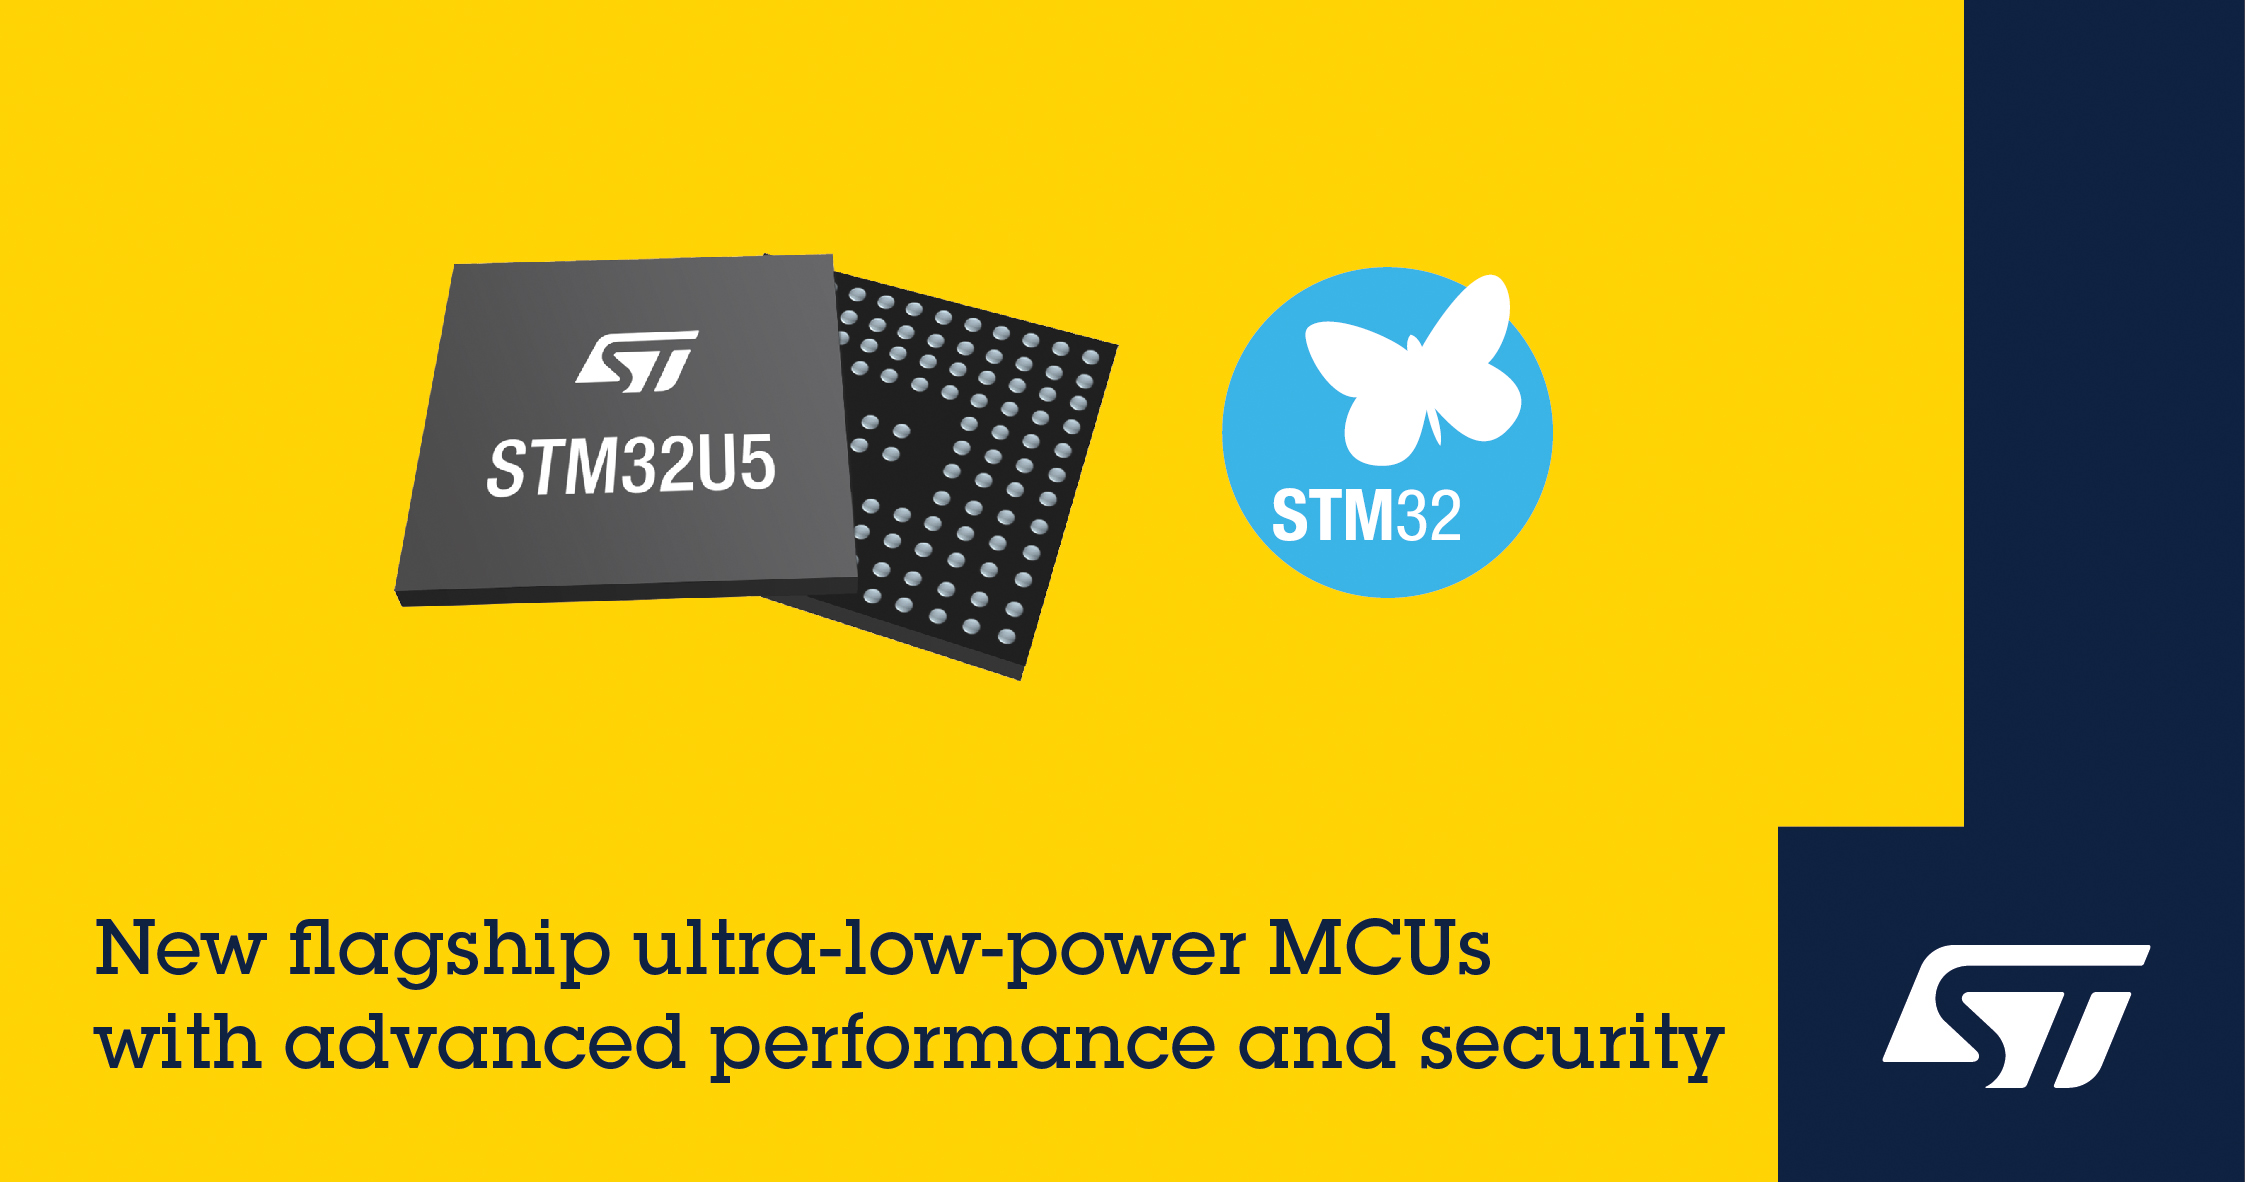 STマイクロエレクトロニクス、先進的な性能とセキュリティ機能を搭載し、さらなる超低消費電力を実現したSTM32U5マイコンを発表